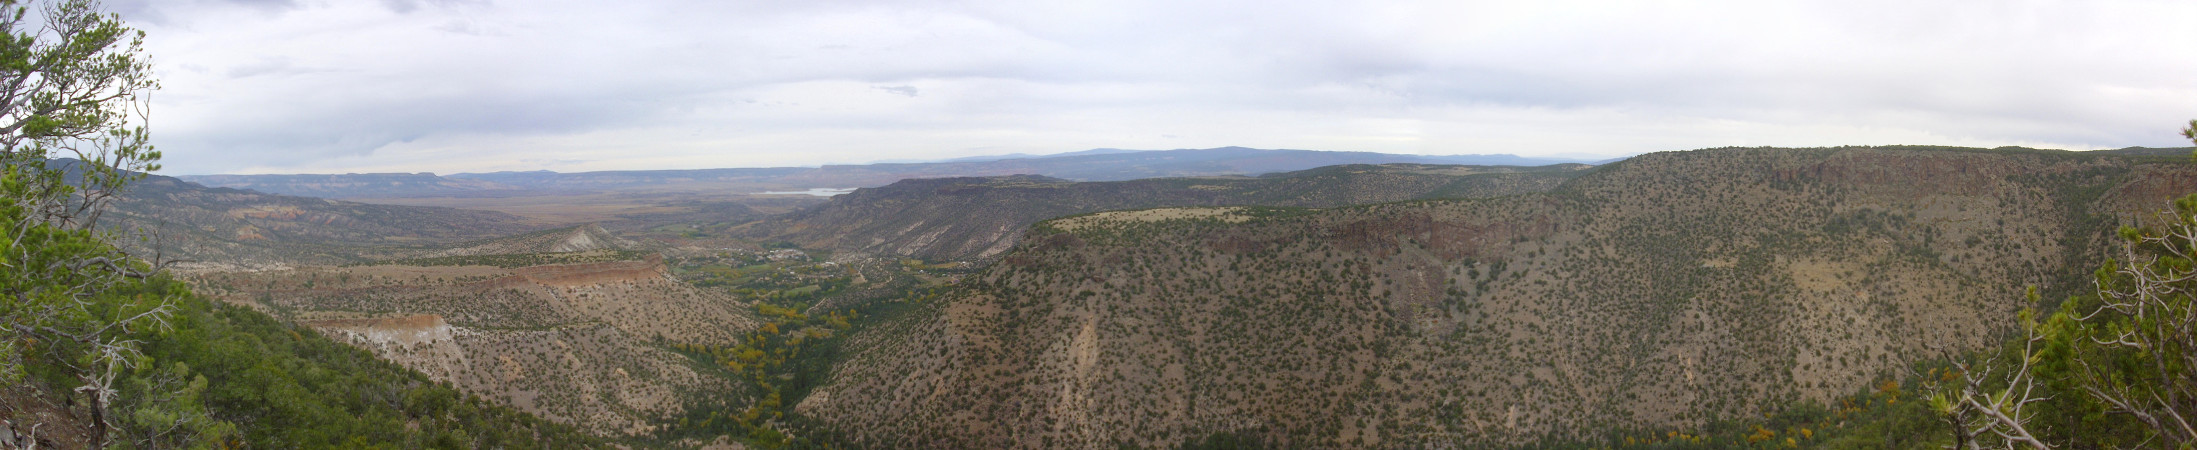 Canones area seen from Polvadera Mesa